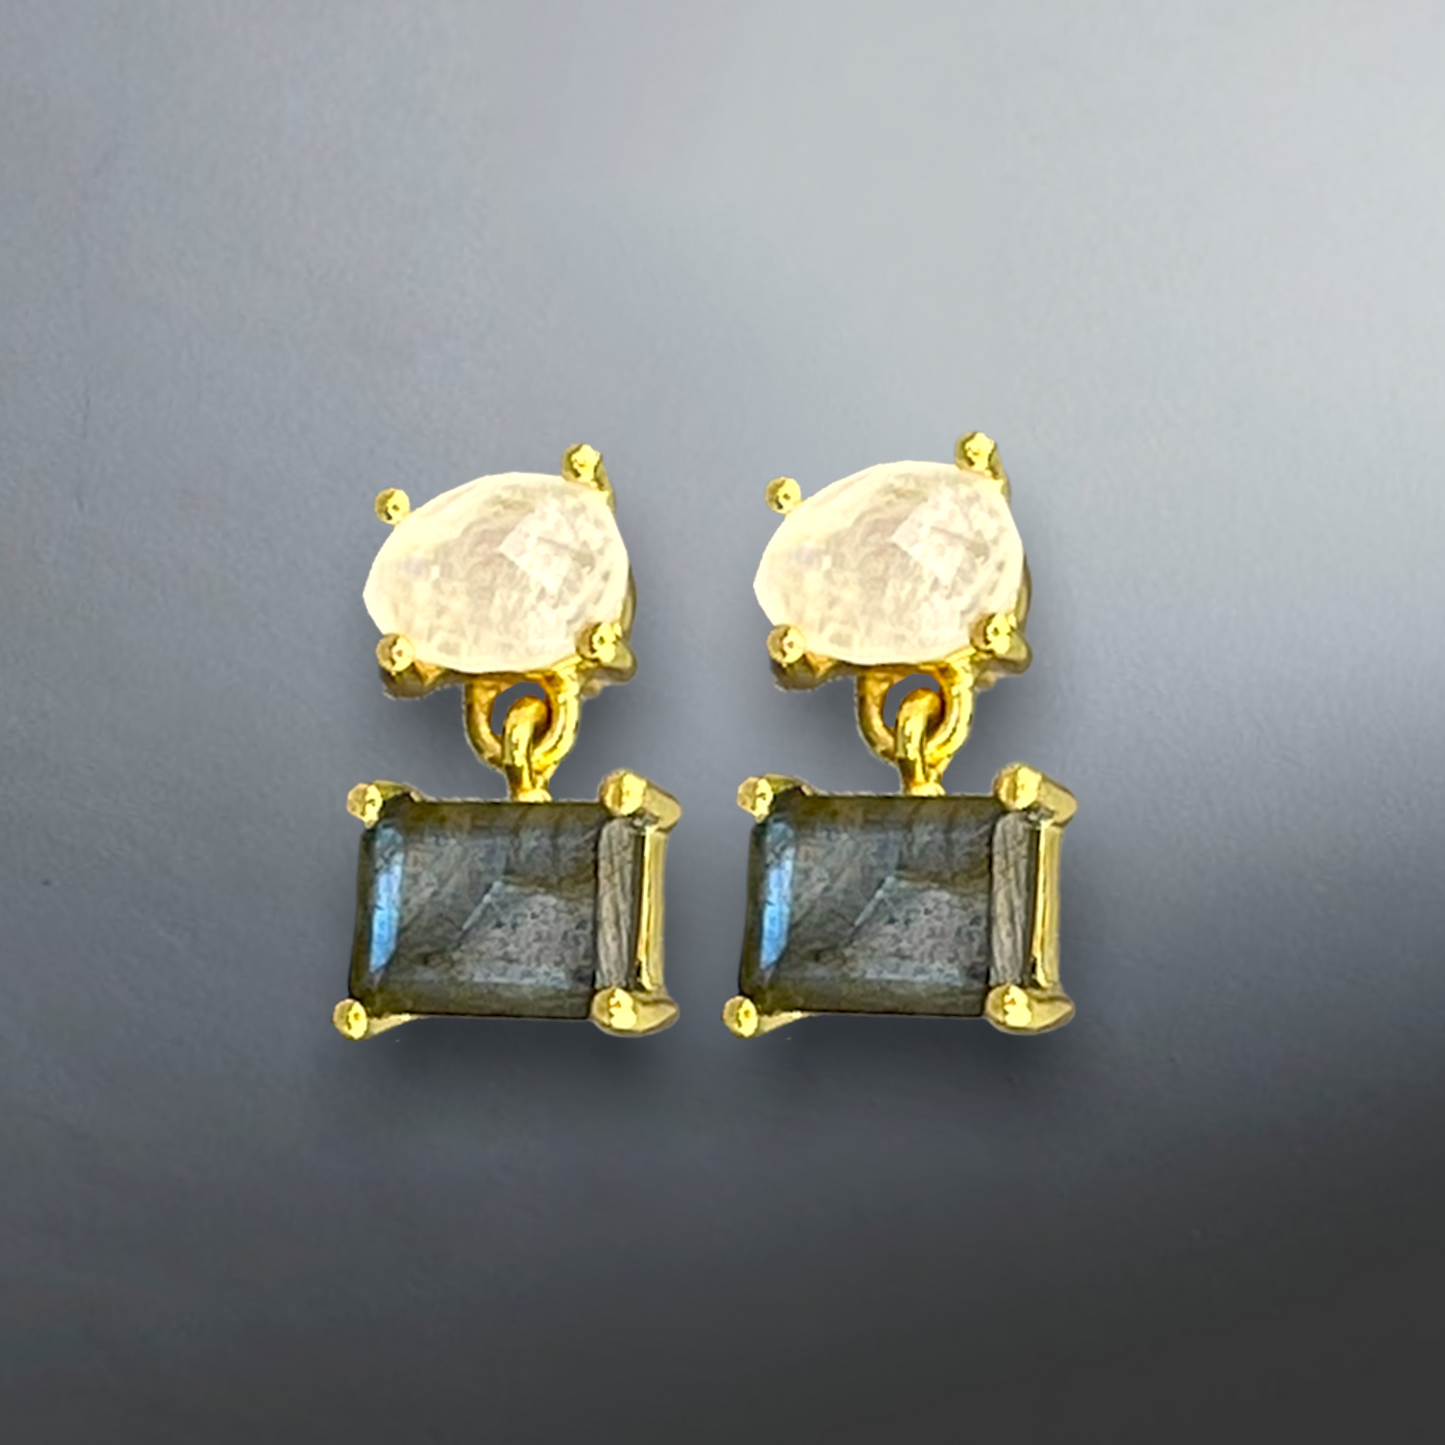 Luxurious Labradorite & Moonstone Gemstone Stud Earrings - 925 Sterling Gold Plated - Ear925-111